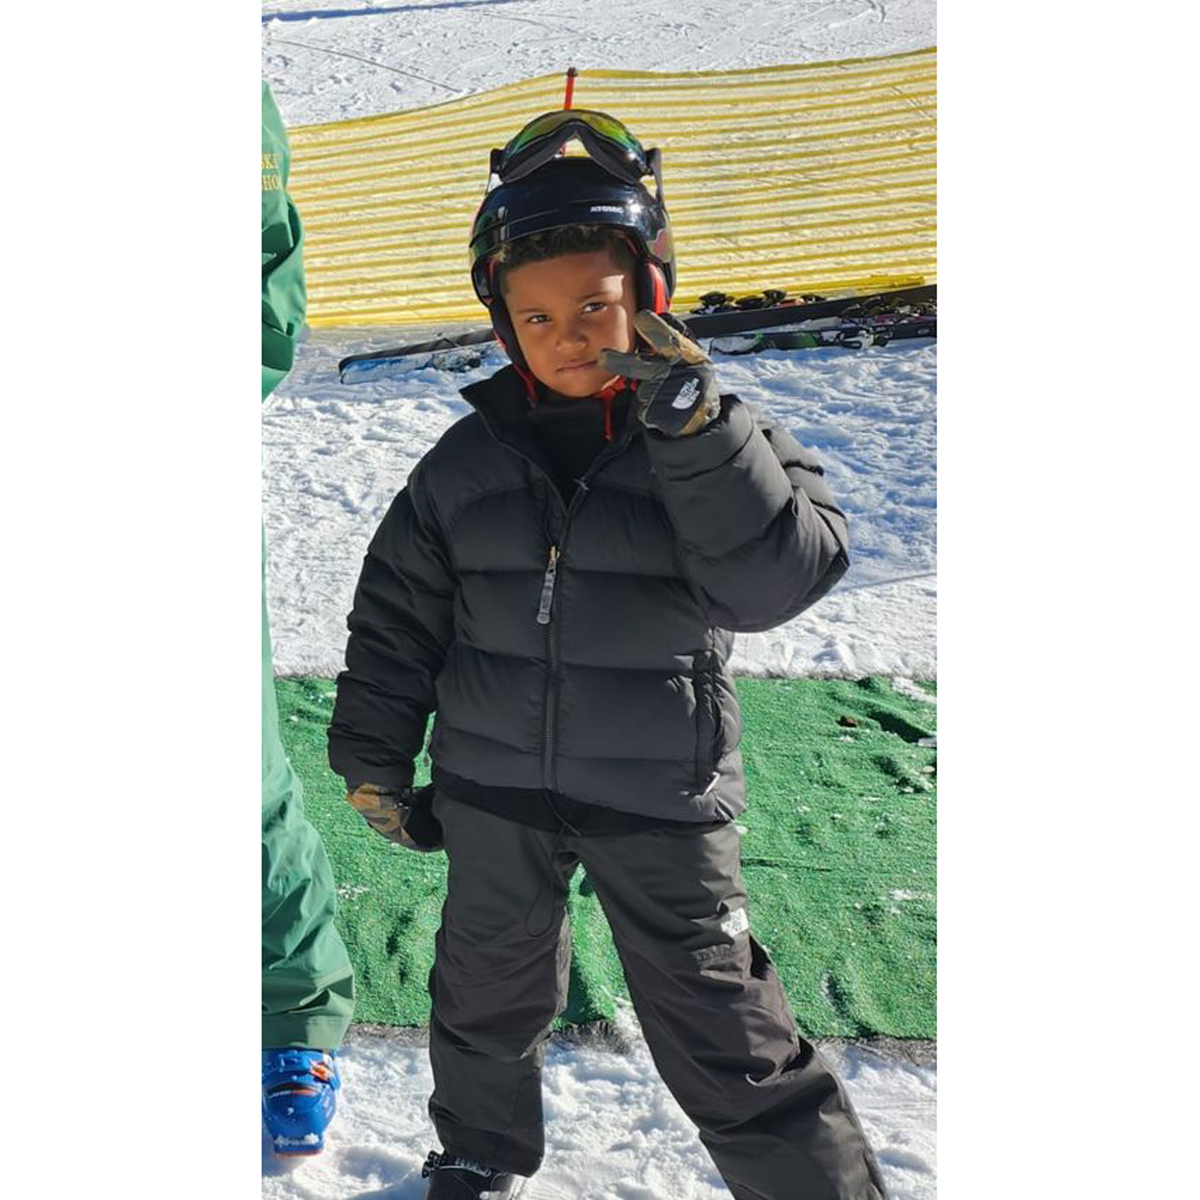 Kim Kardashian Shares Photos from Family Ski Vacation with All 4 Kids